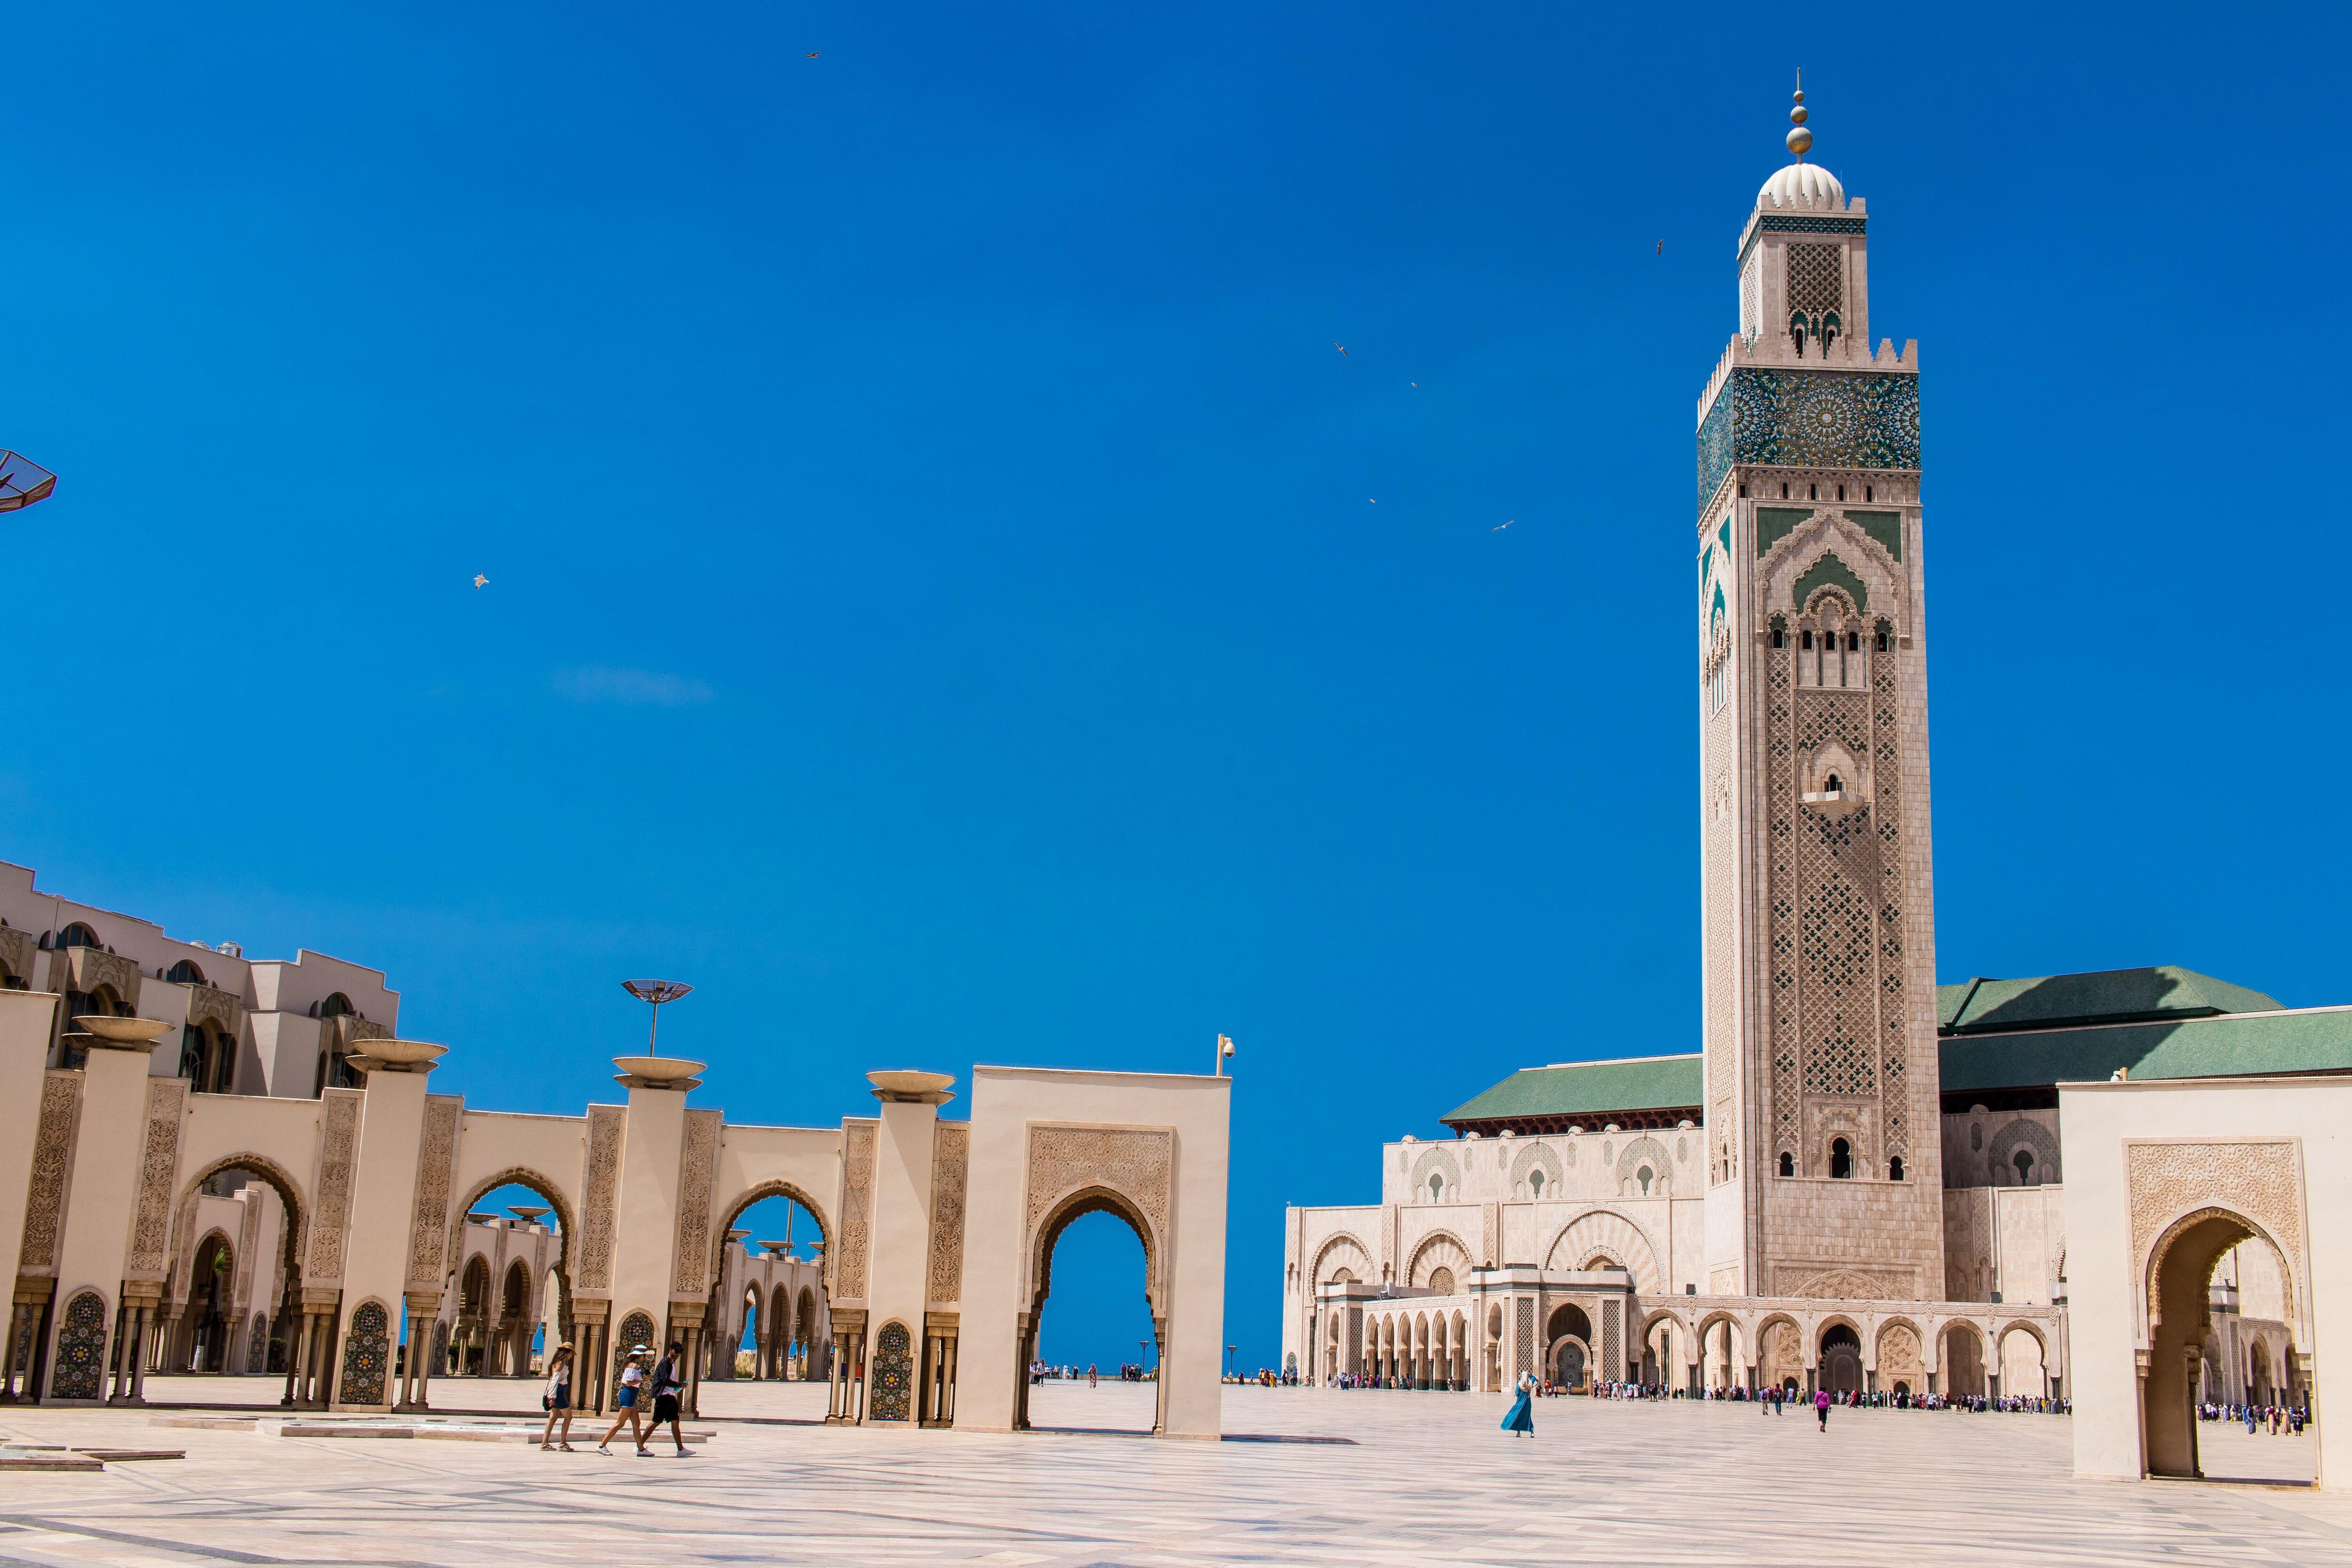 La gran mezquita Hassan II, inaugurada en 1993.